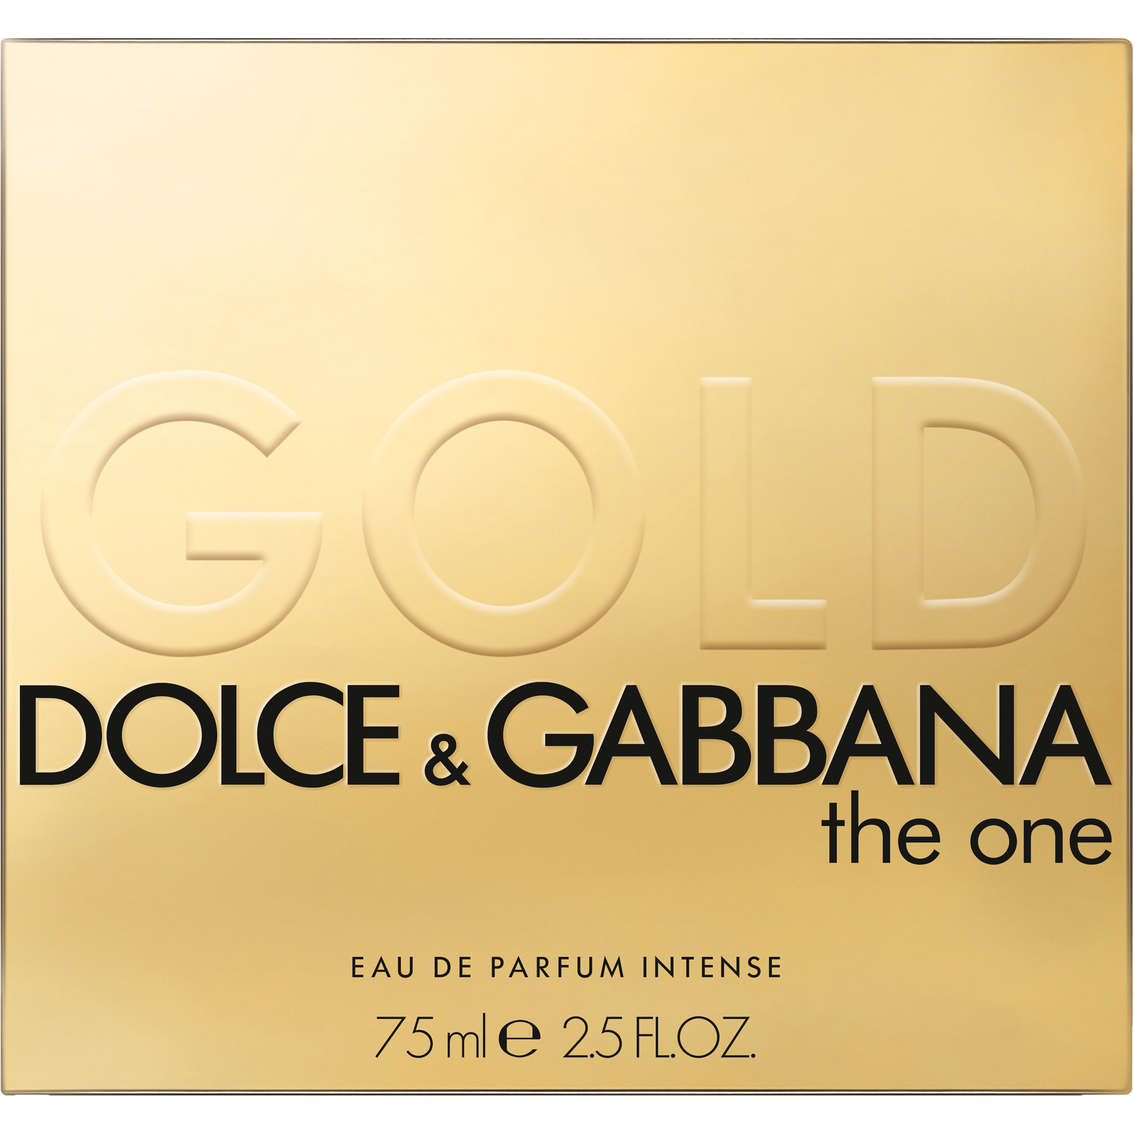 Dolce & Gabbana The One Gold Eau de Parfum Intense - Image 4 of 4